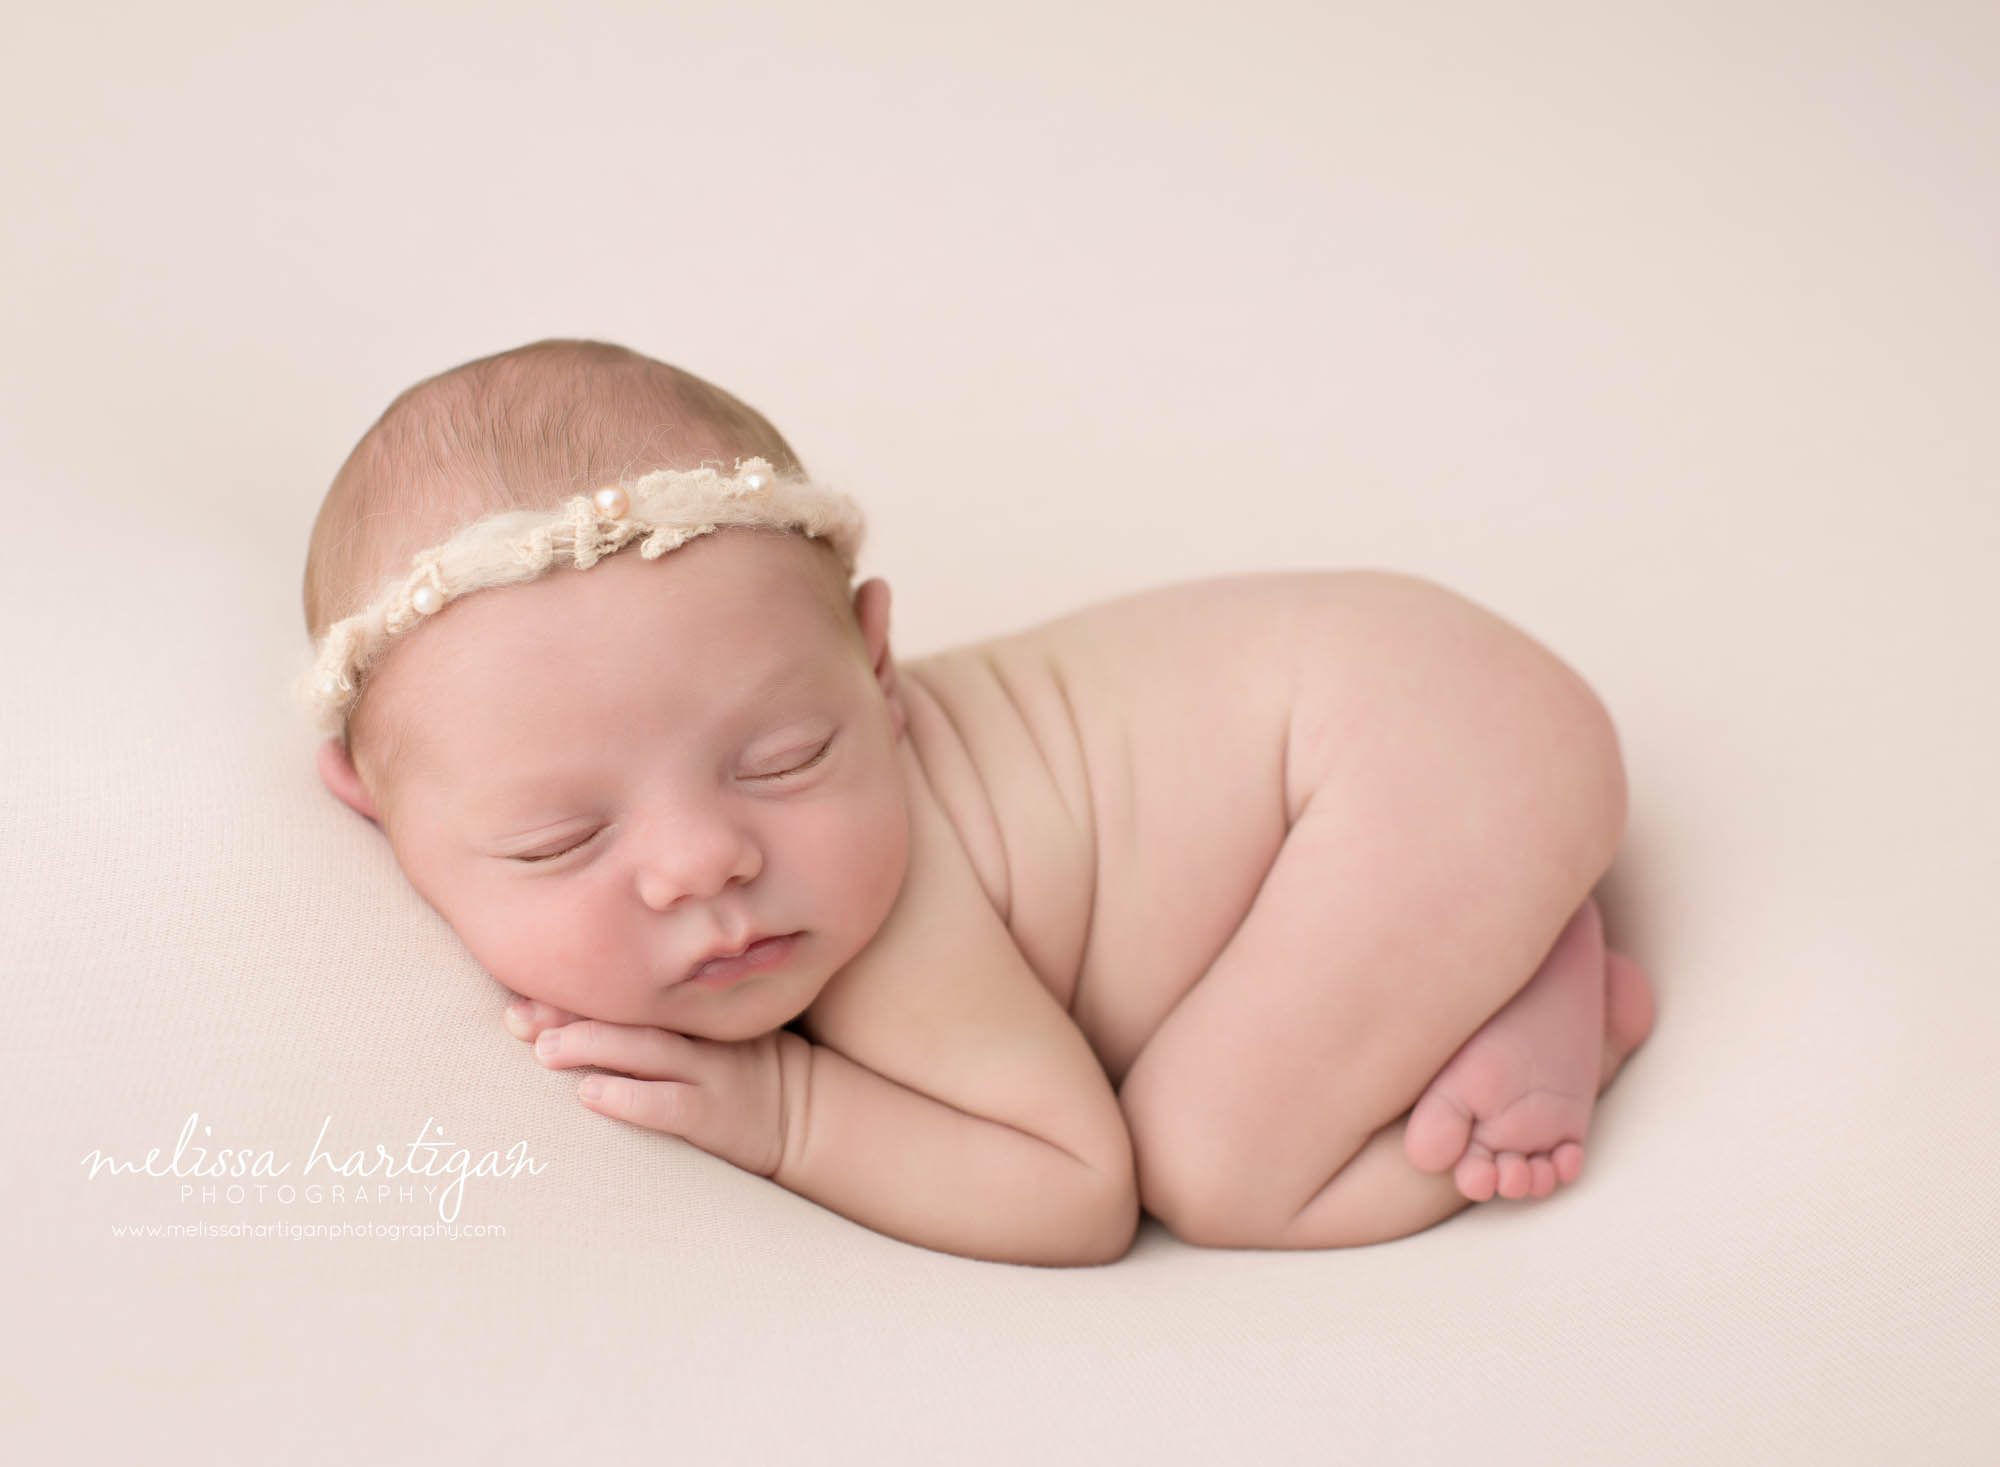 newborn baby girl posed on tummy on pink backdrop wearing headband